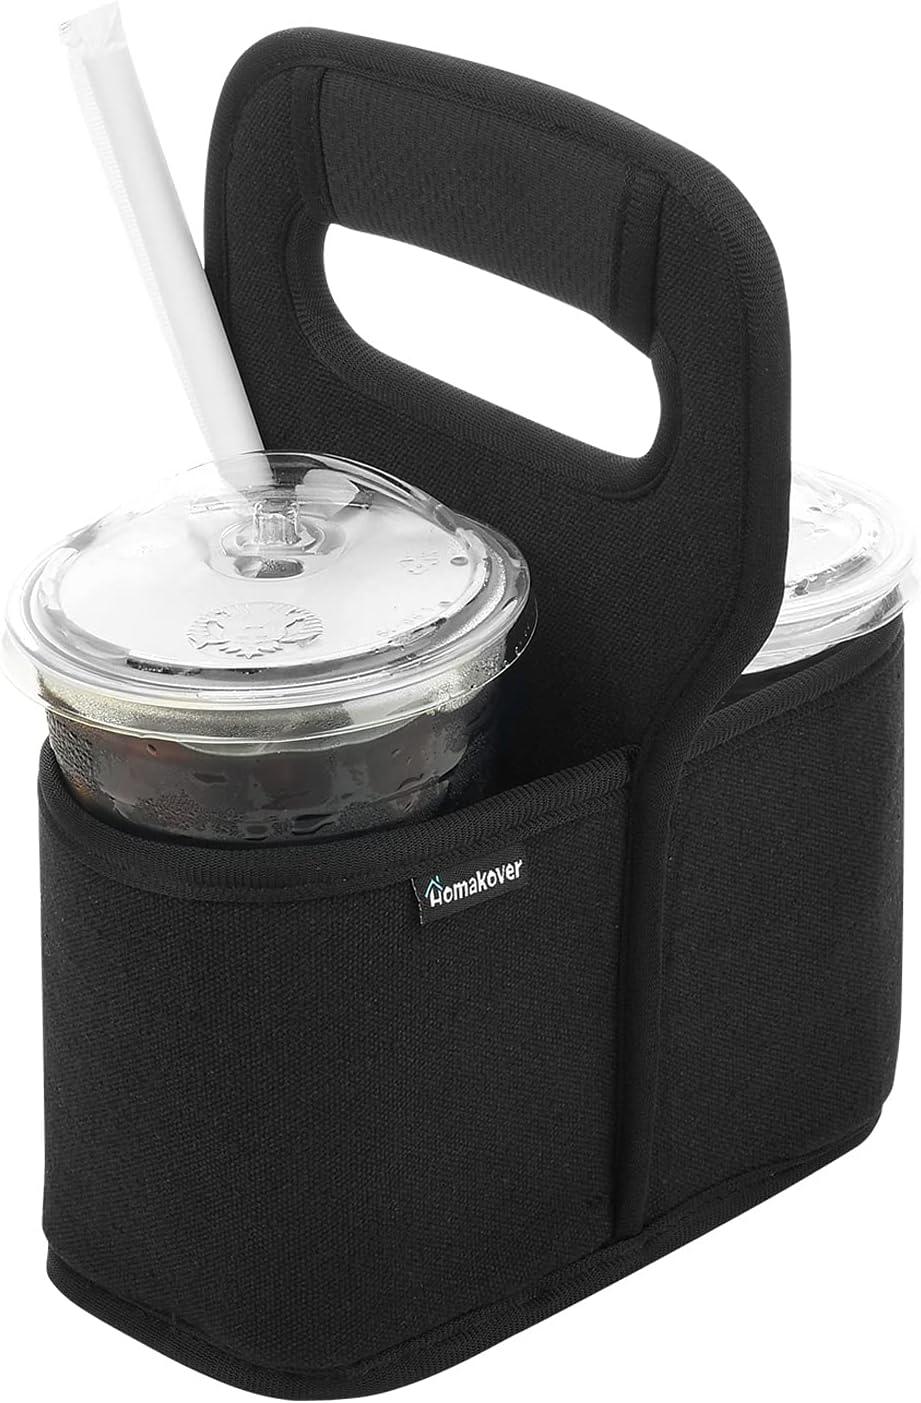 Portavasos con asa, soporte reutilizable para tazas de café para bebidas - VIRTUAL MUEBLES